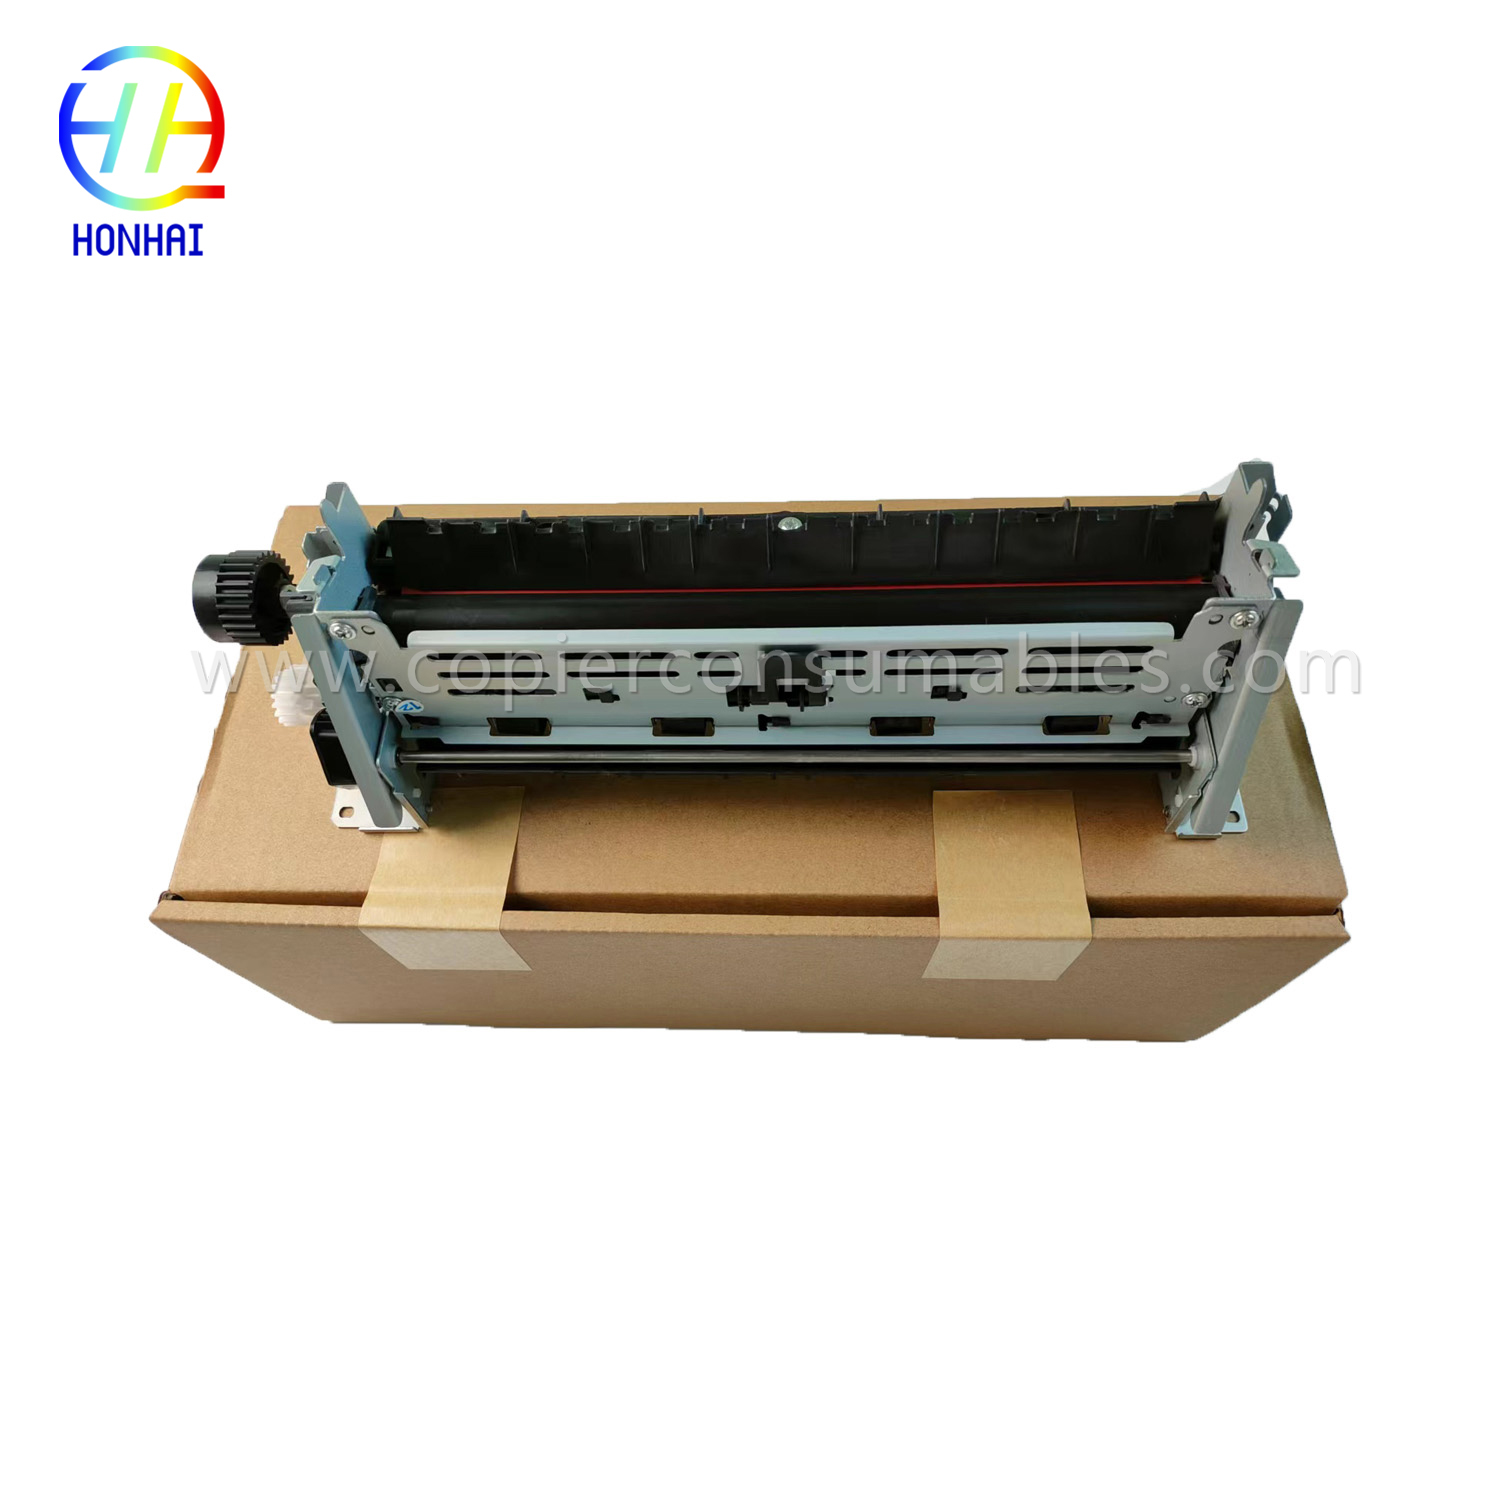 FUSSER FLIM UNIT עבור HP LaserJet Printer Pro 400 M401 M401DN M425 RM1-8809 RM1-8809-000CN Fuser Assembly 220 v (2).jpg-1 拷贝